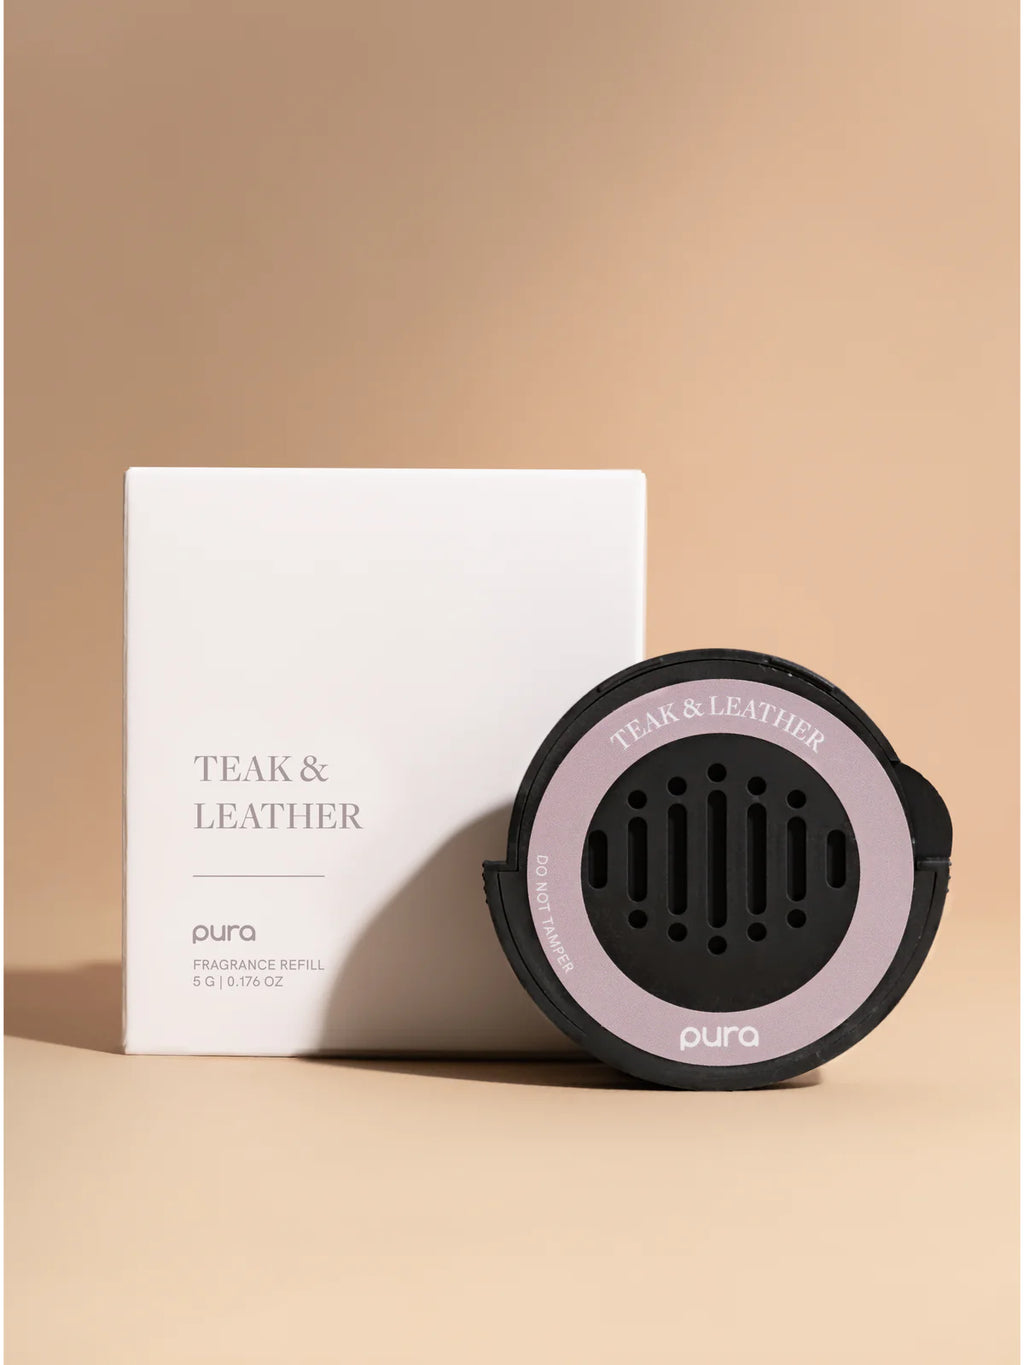 Pura Teak & Leather car diffuser scent refill